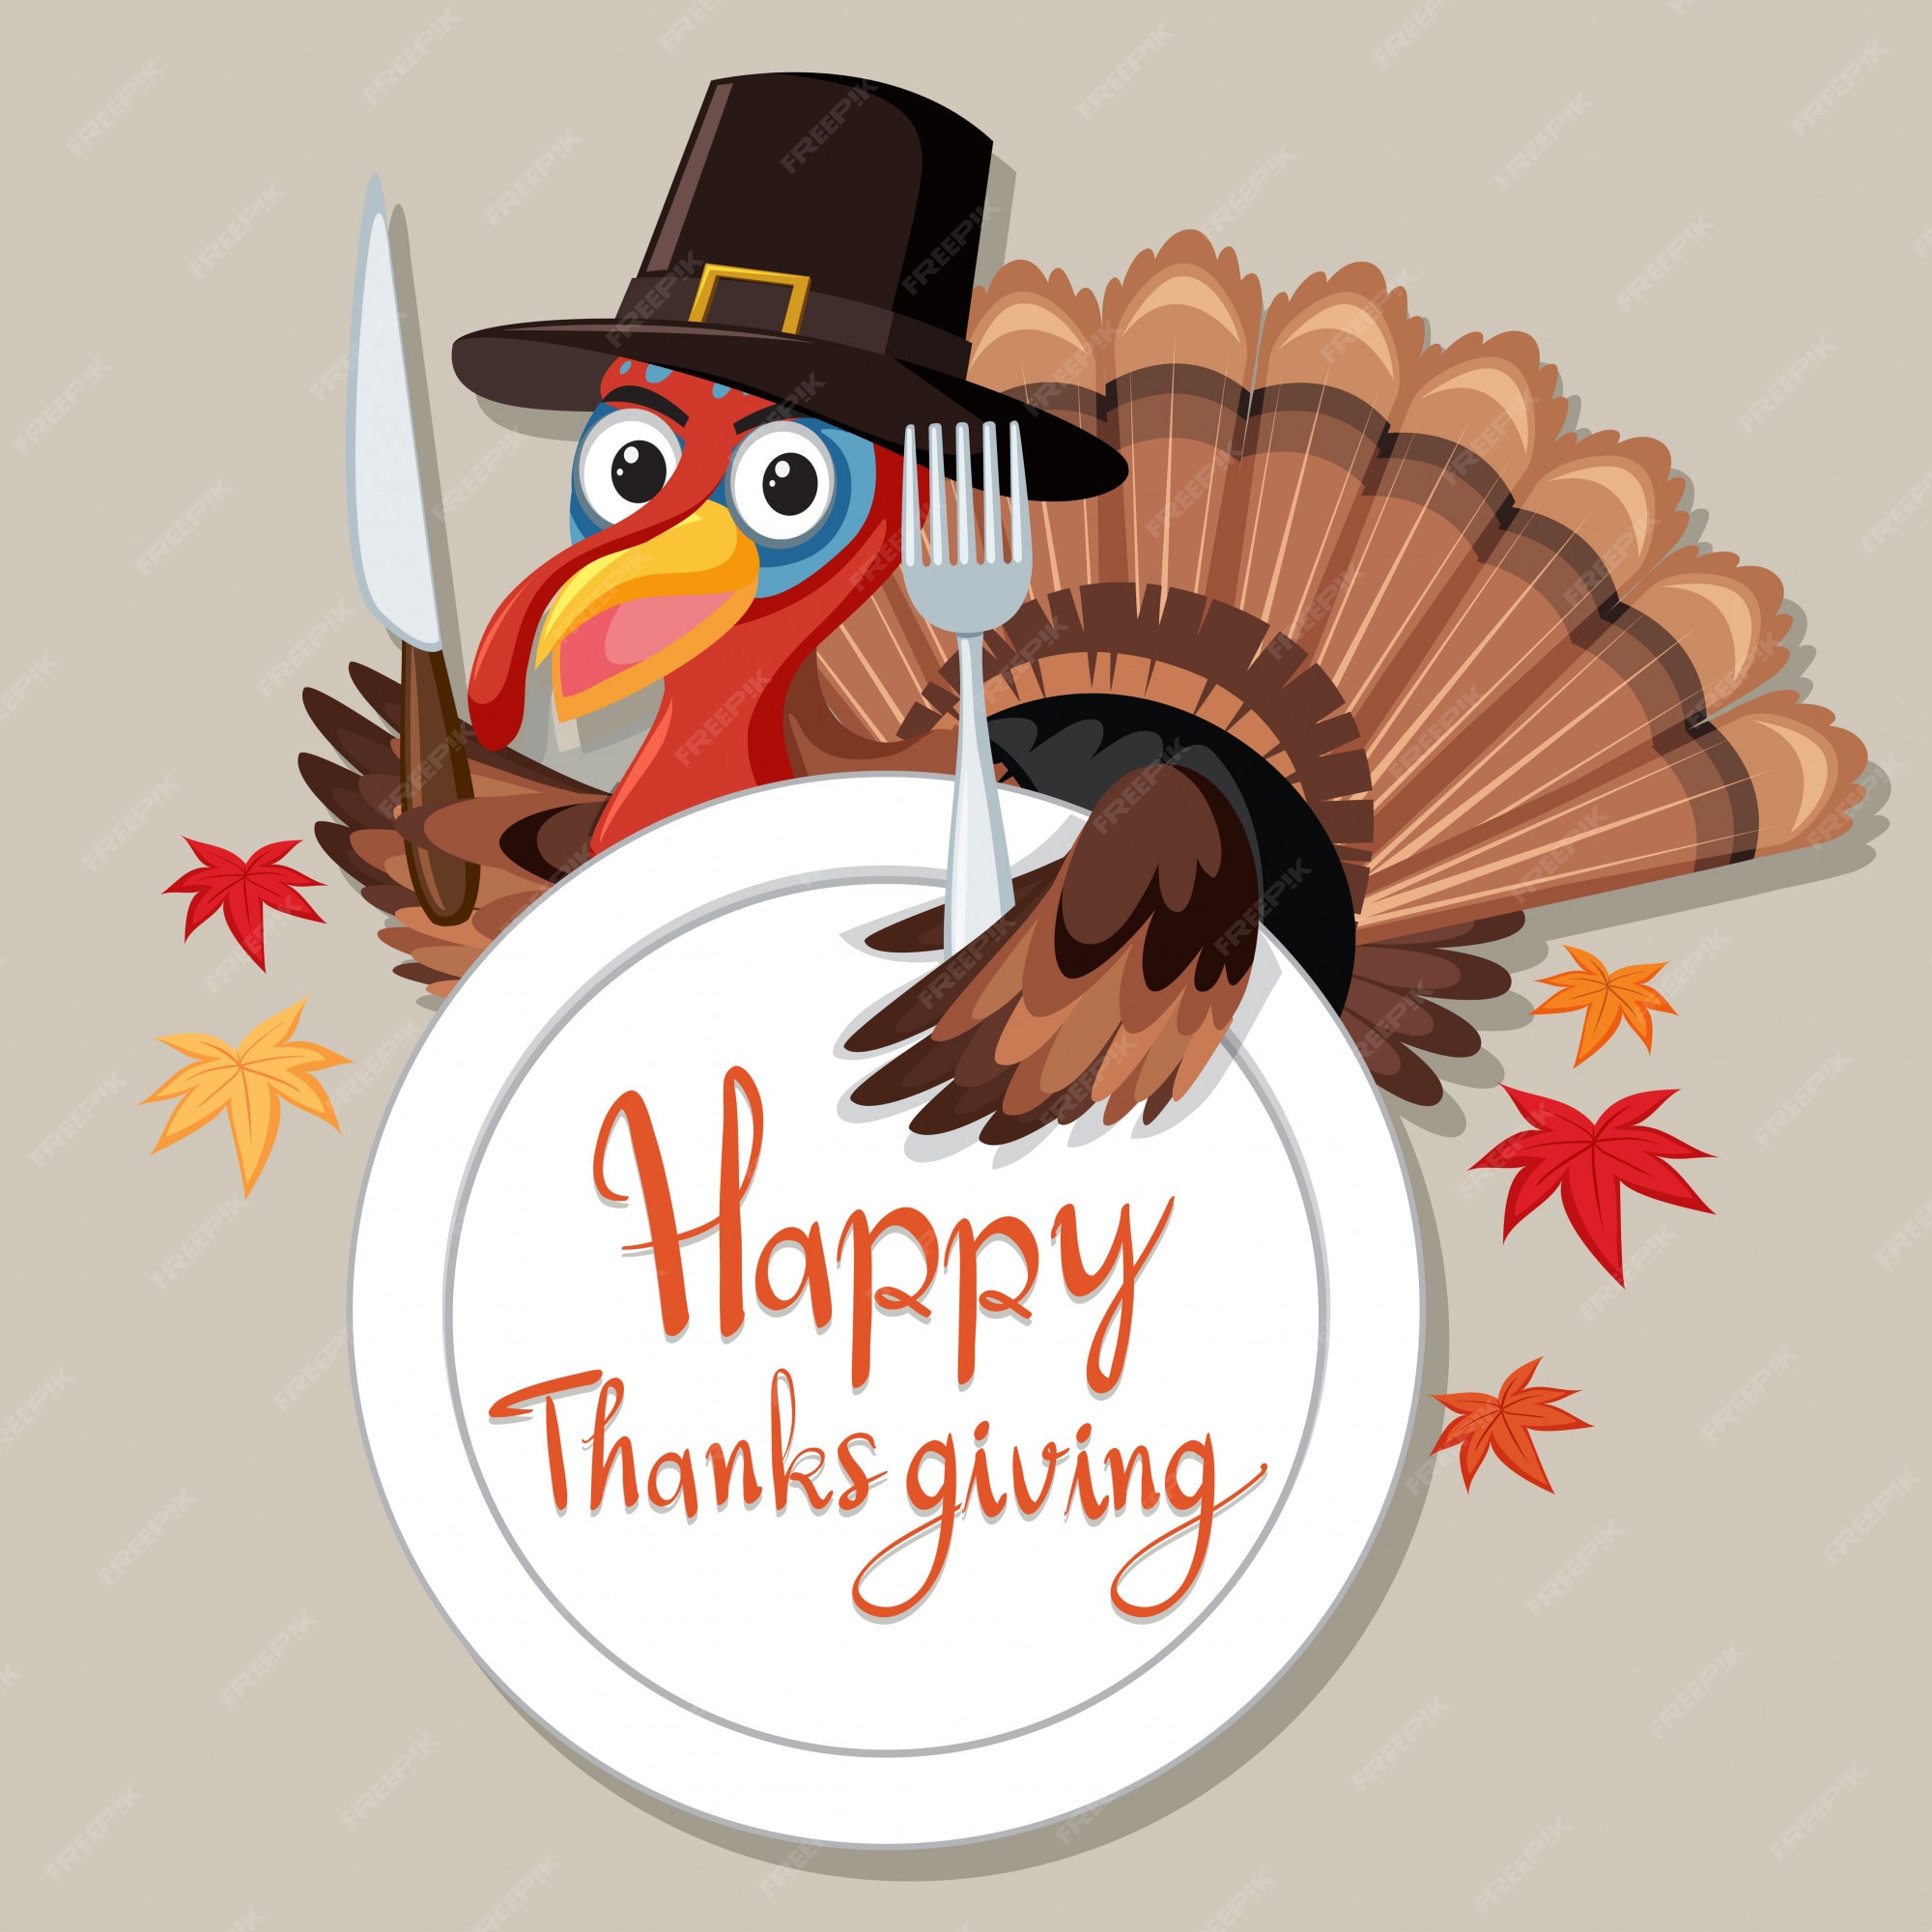 Happy Thanksgiving Turkey Cartoon Images - Free Download on Freepik